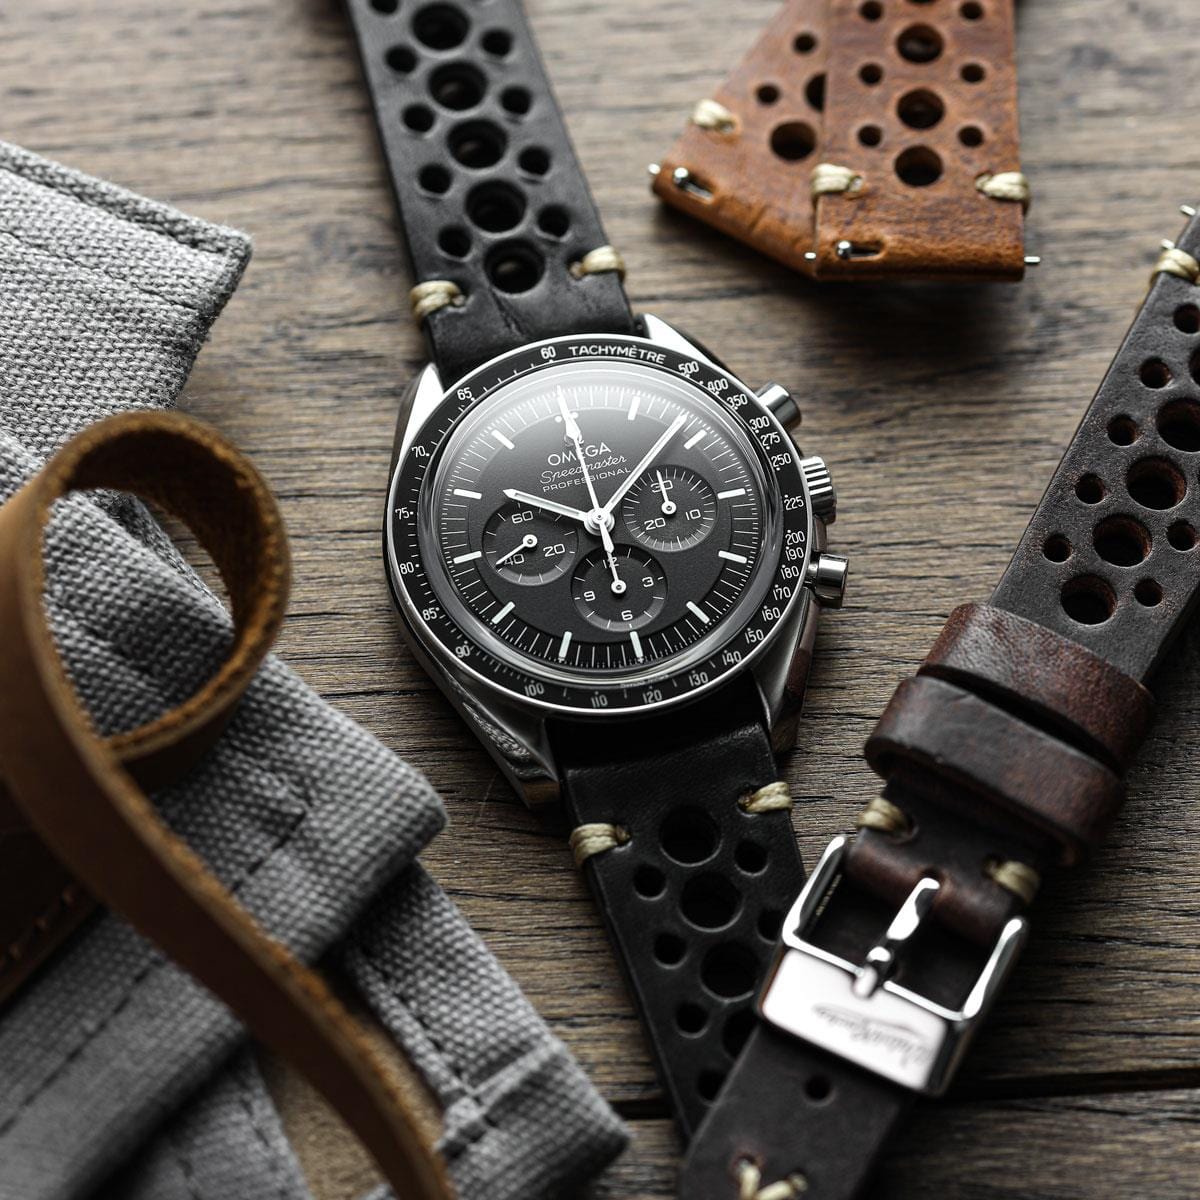 WatchGecko V-Stitch Italian Leather Perforated Watch Strap - Black